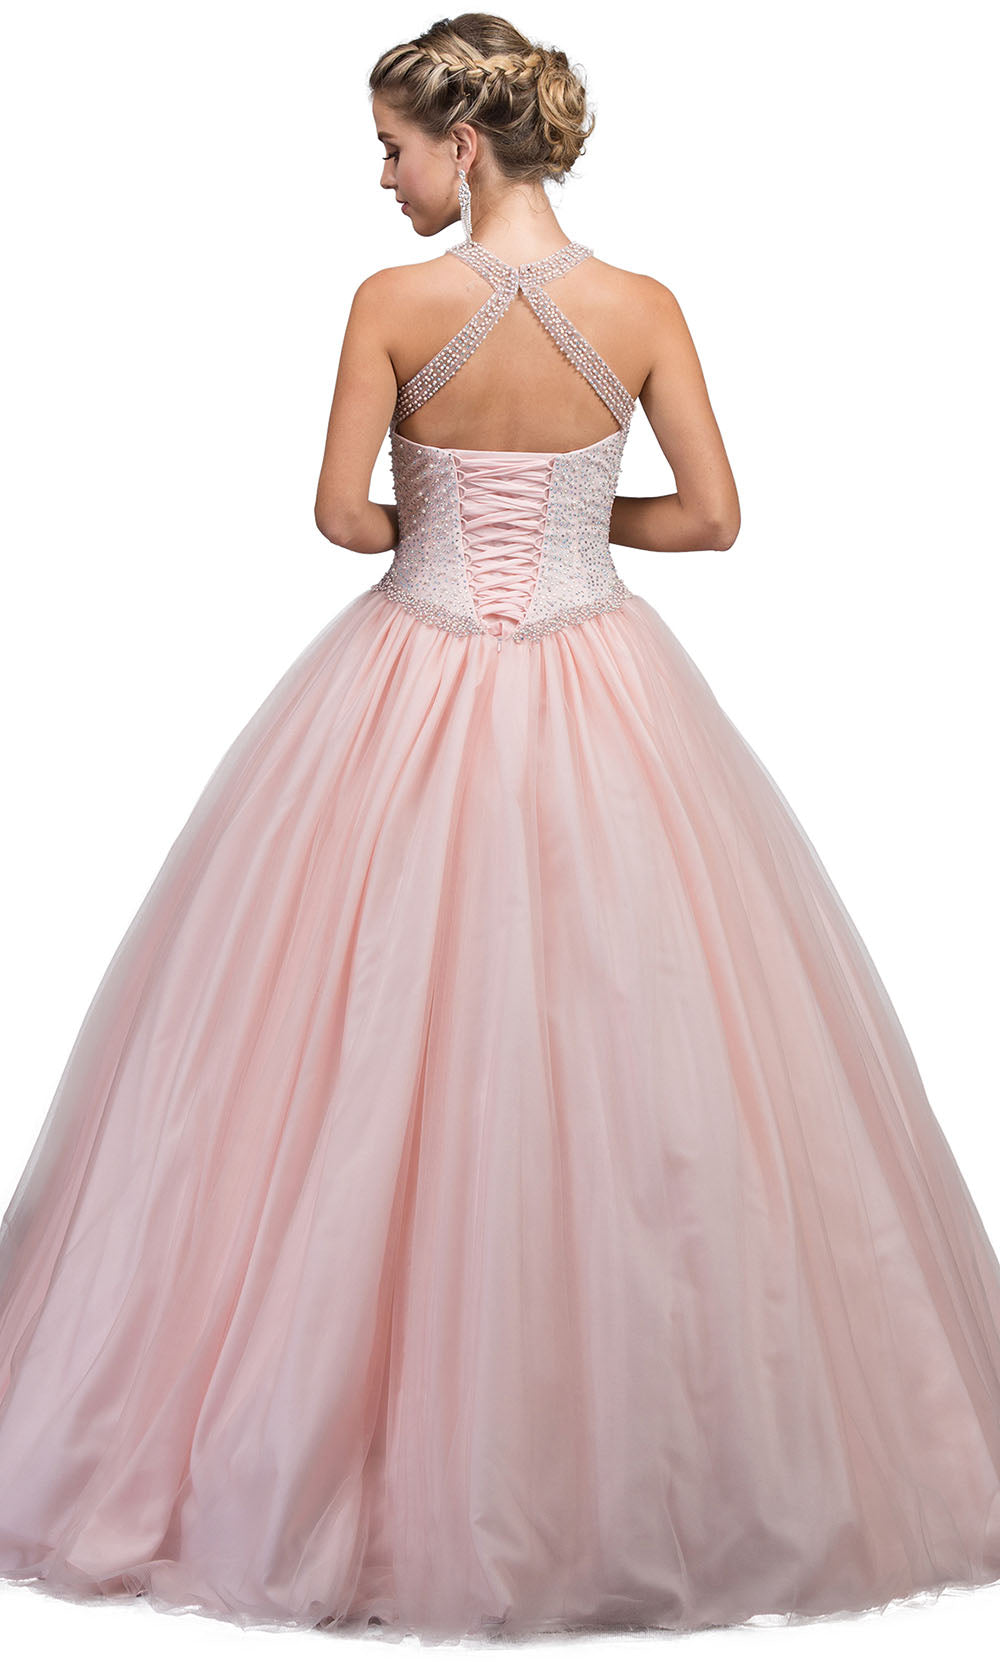 Dancing Queen - 1169 Embroidered Halter Neck Ballgown In Pink